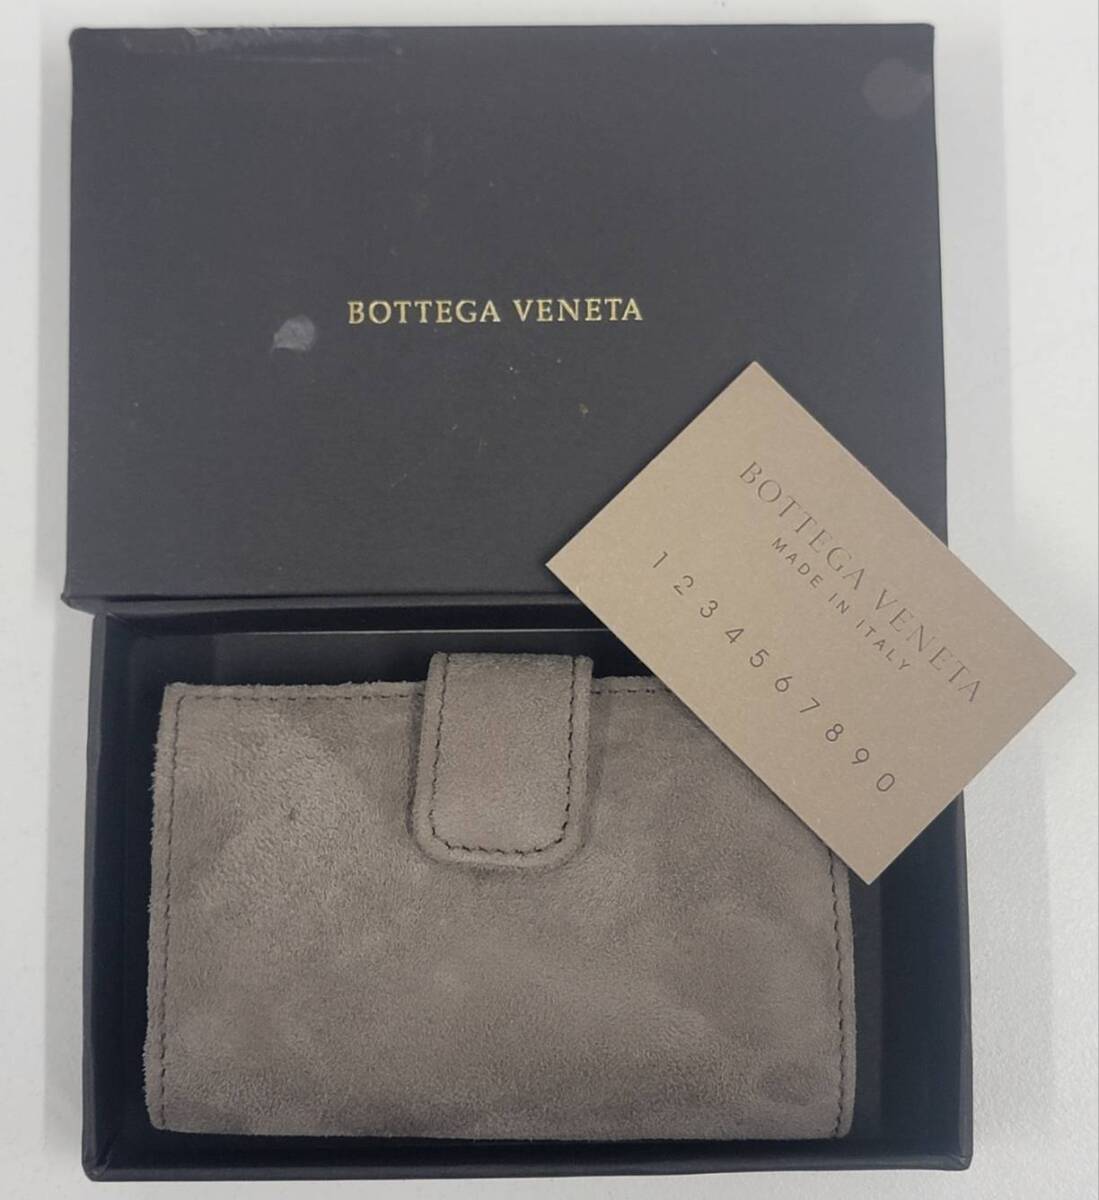 *BOTTEGA VENETA Bottega Veneta кейс для украшений замша серый ju бумага с ящиком [ б/у ]